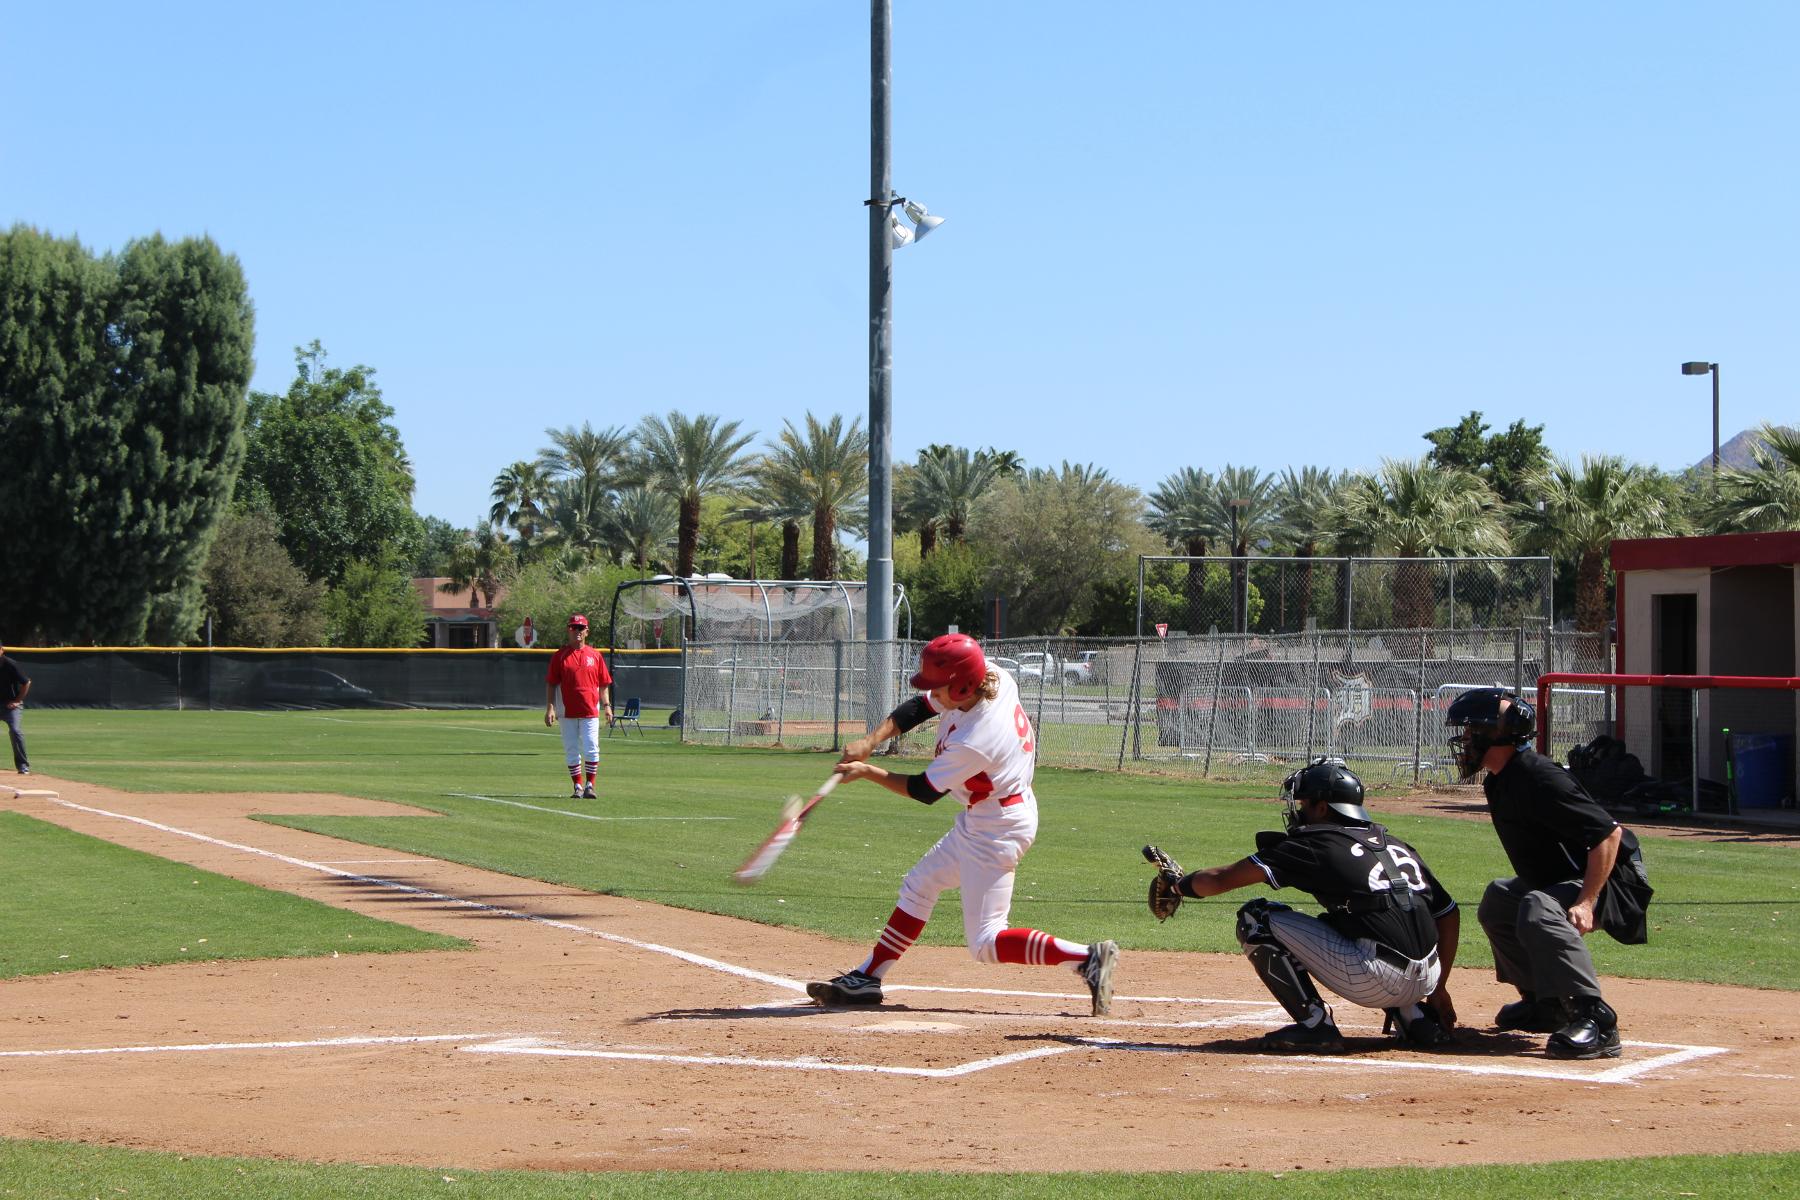 Asuncion's Single in the 11th Lifts Baseball to Walk-Off Win